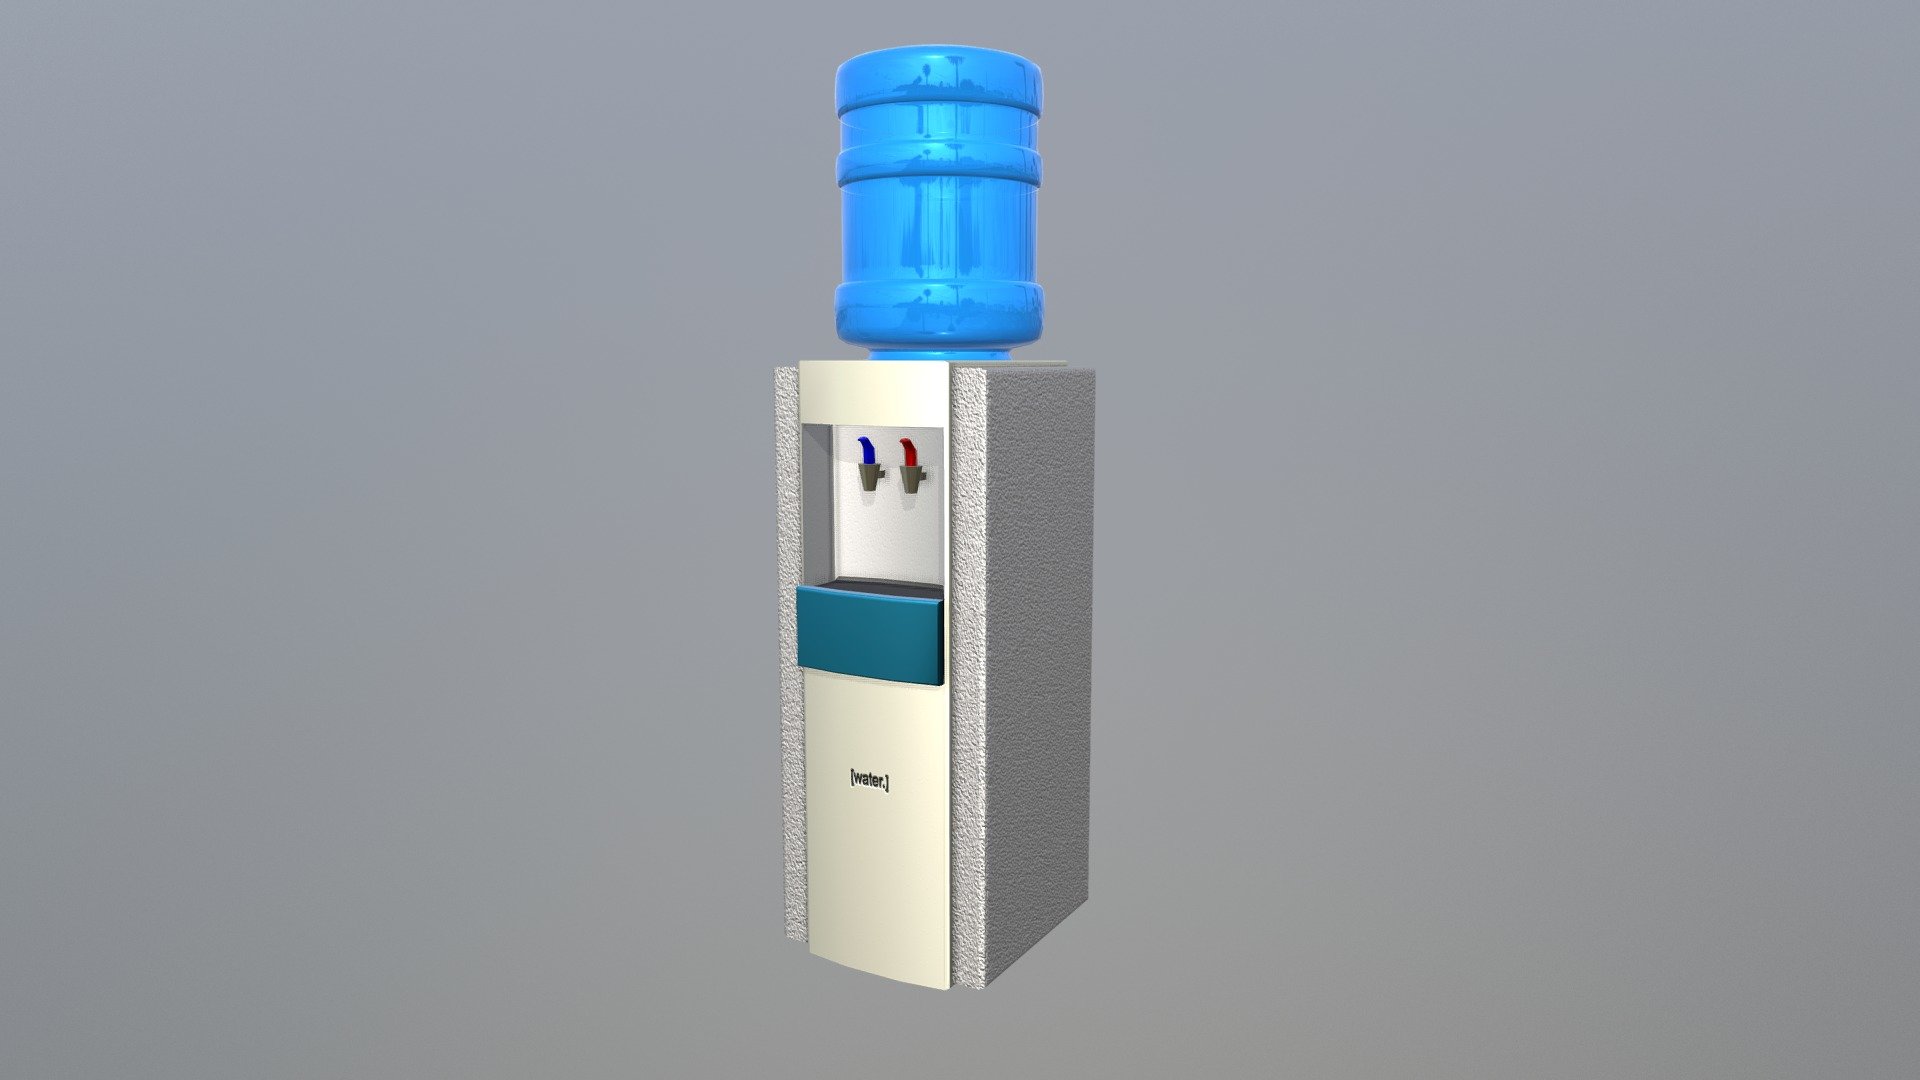 Water Dispenser i made for an office scene - Water Dispenser - 3D model by Bryan (@BryanSanchinolo) 3d model